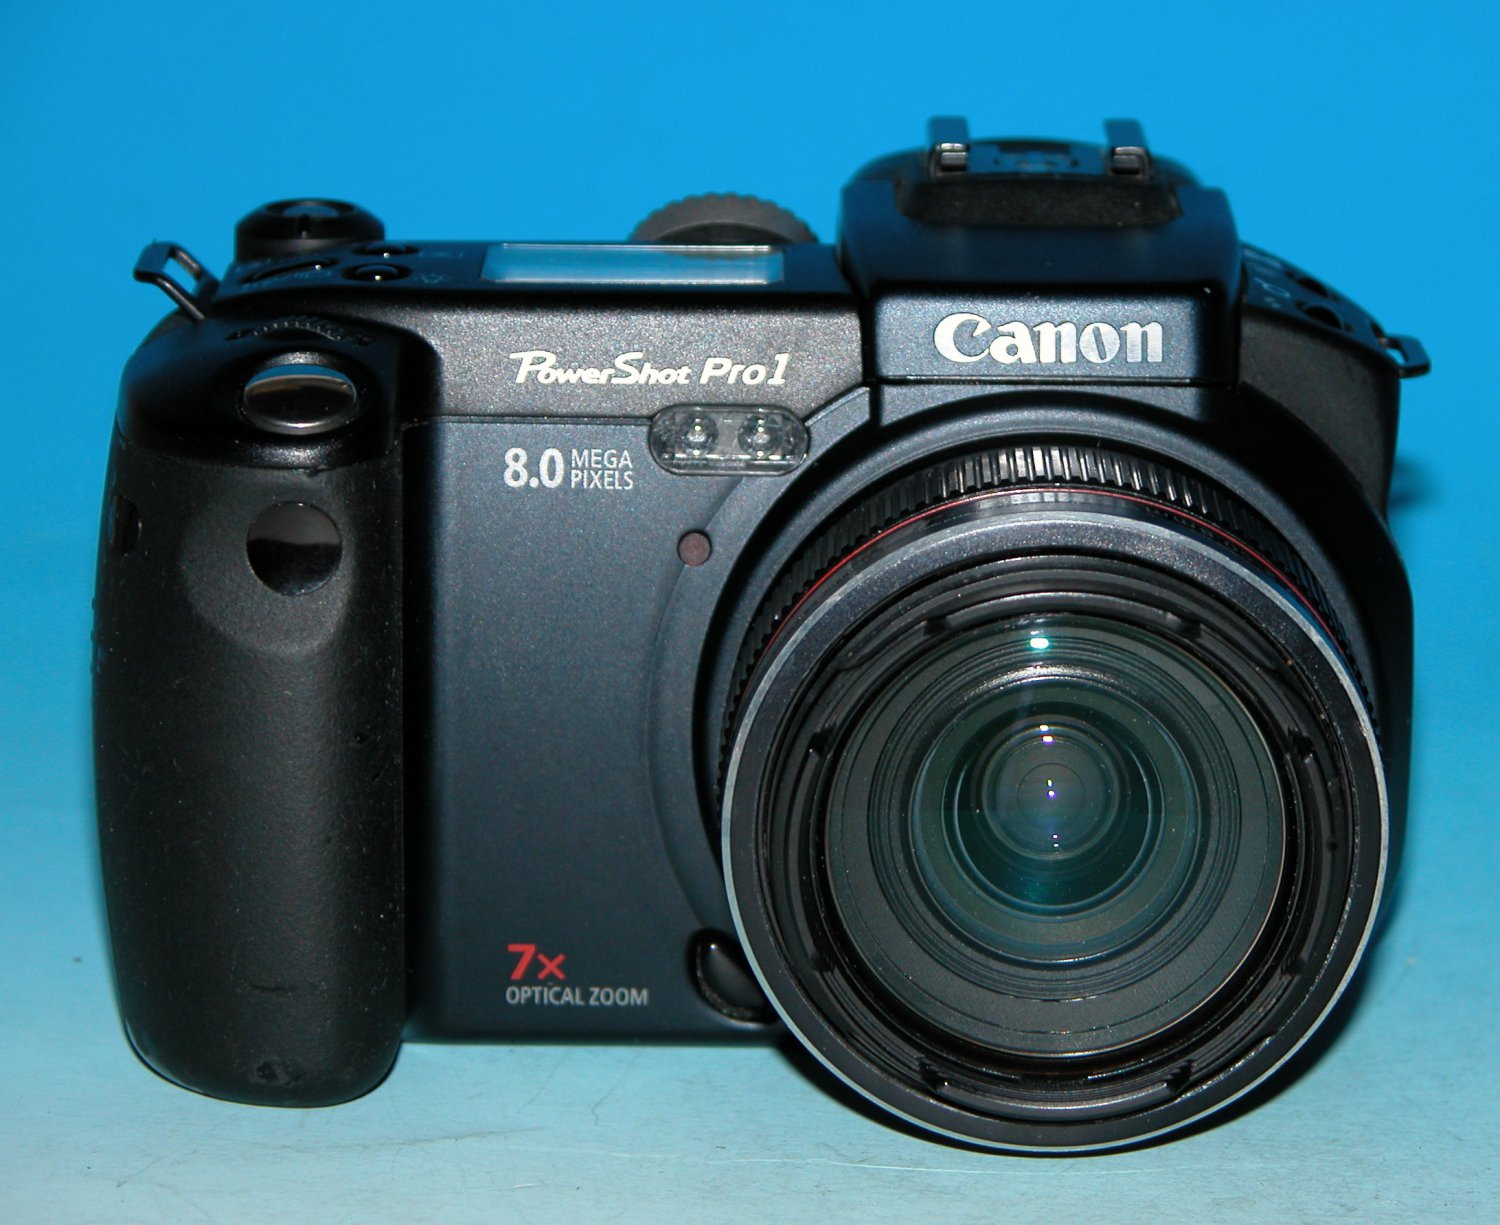 Canon PowerShot Pro 1 8.0MP Digital Camera - Black #6293